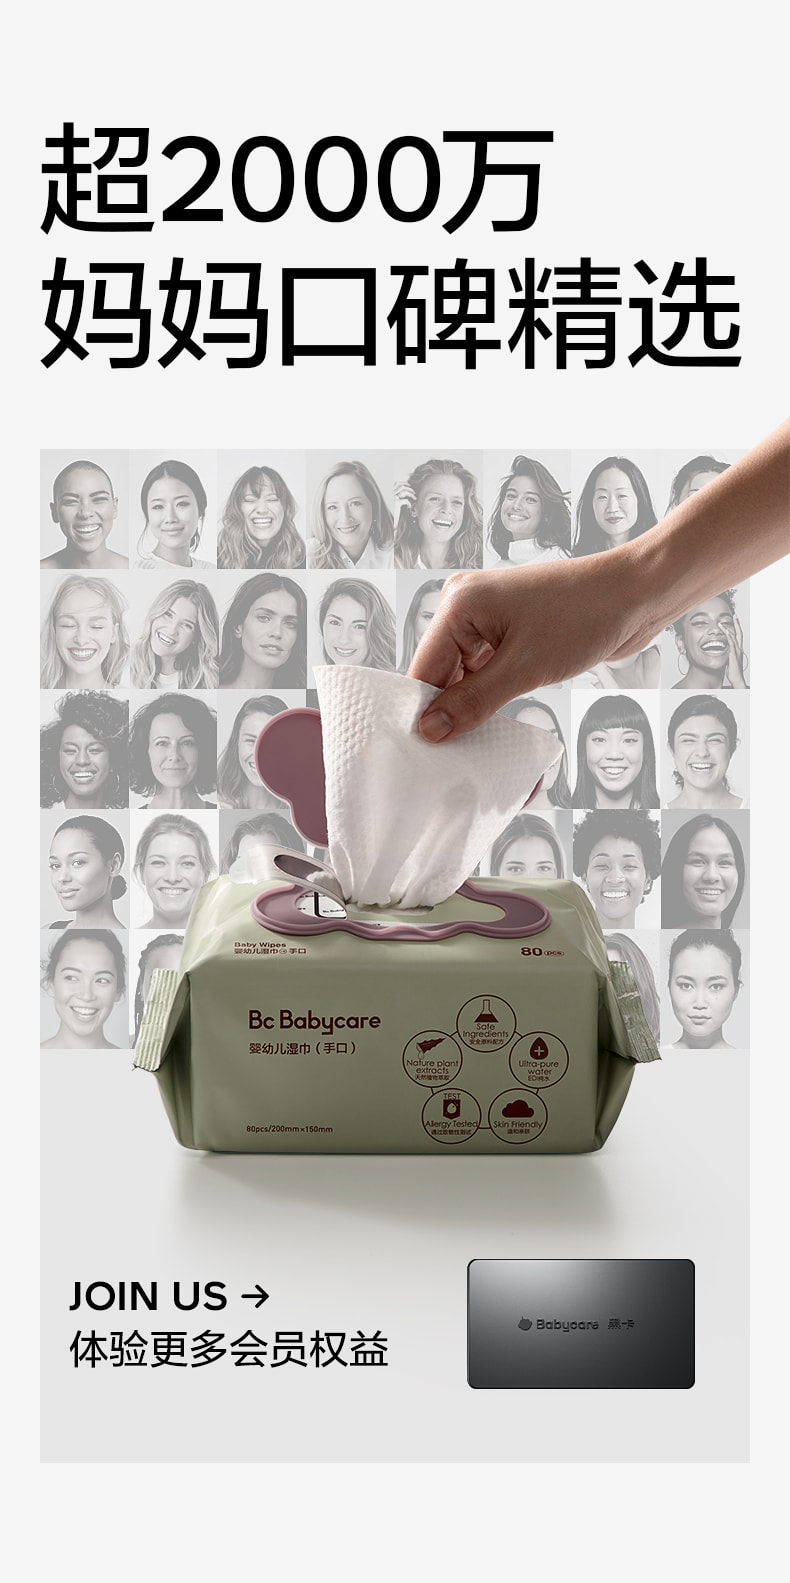 【中國直郵】Bc Babycare 嬰幼兒手口濕紙巾 200mm*150mm-10抽/包